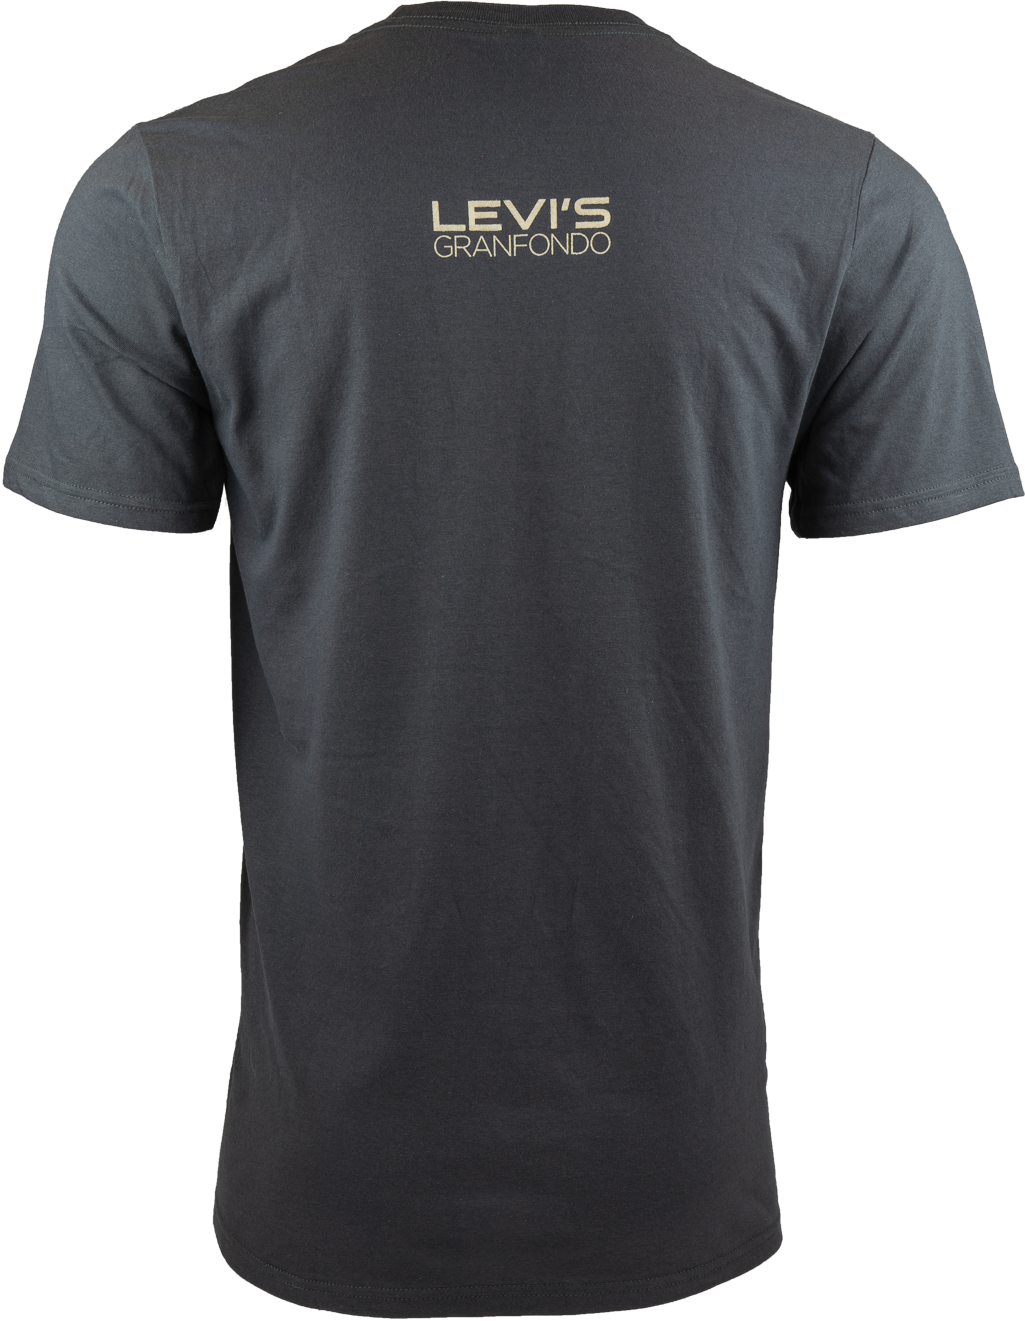 10-Year Anniversary LTD Edition Levi's GranFondo Commemorative T-Shirt